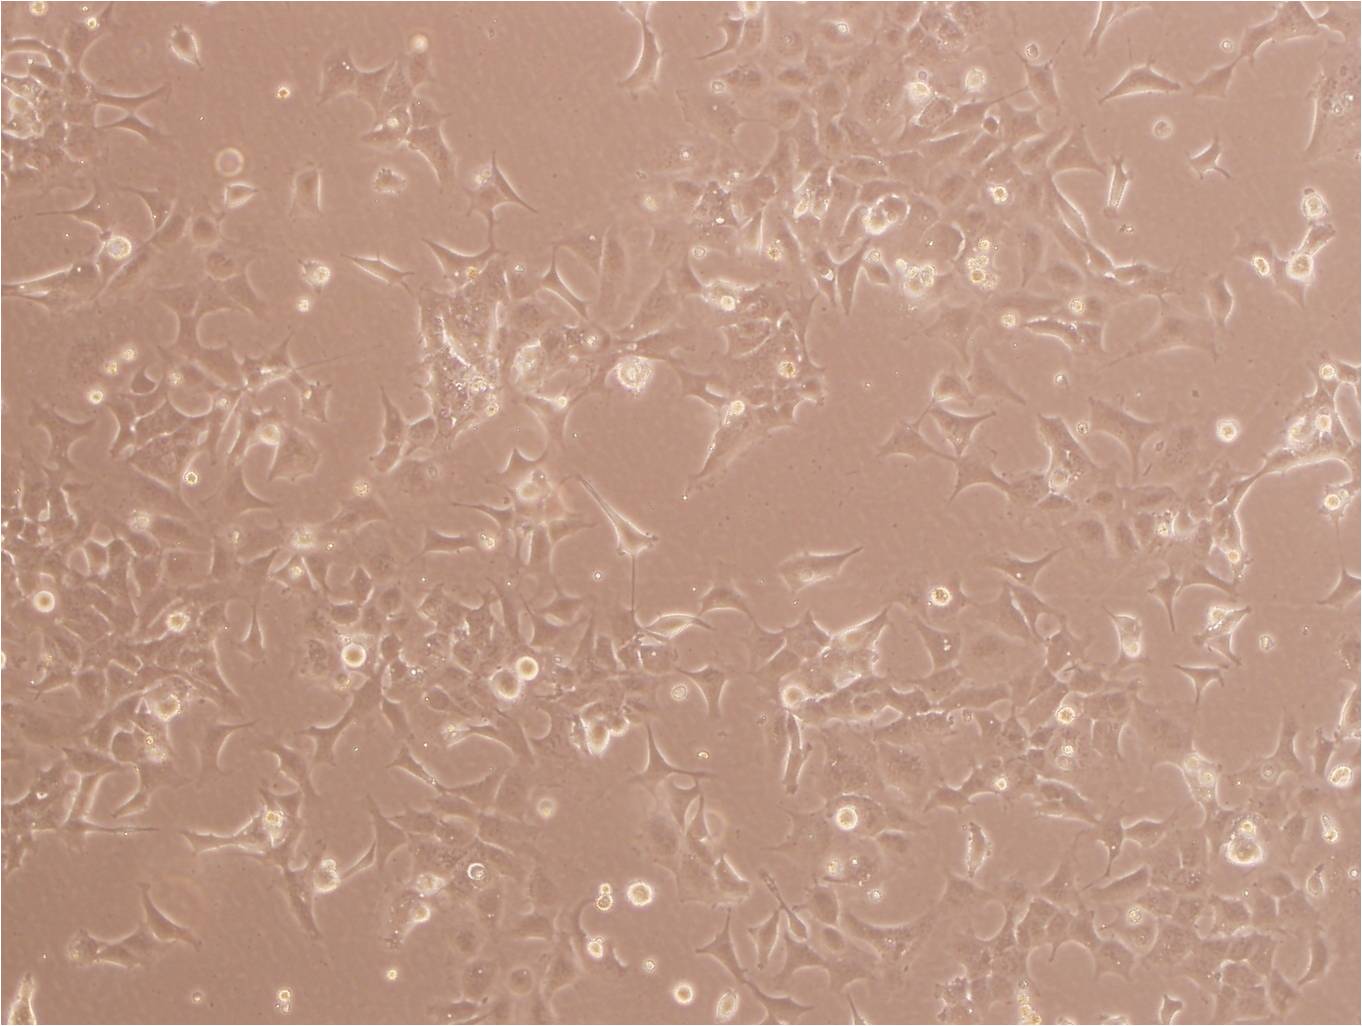 KYSE-140 Cells|人食管鳞癌可传代细胞系,KYSE-140 Cells